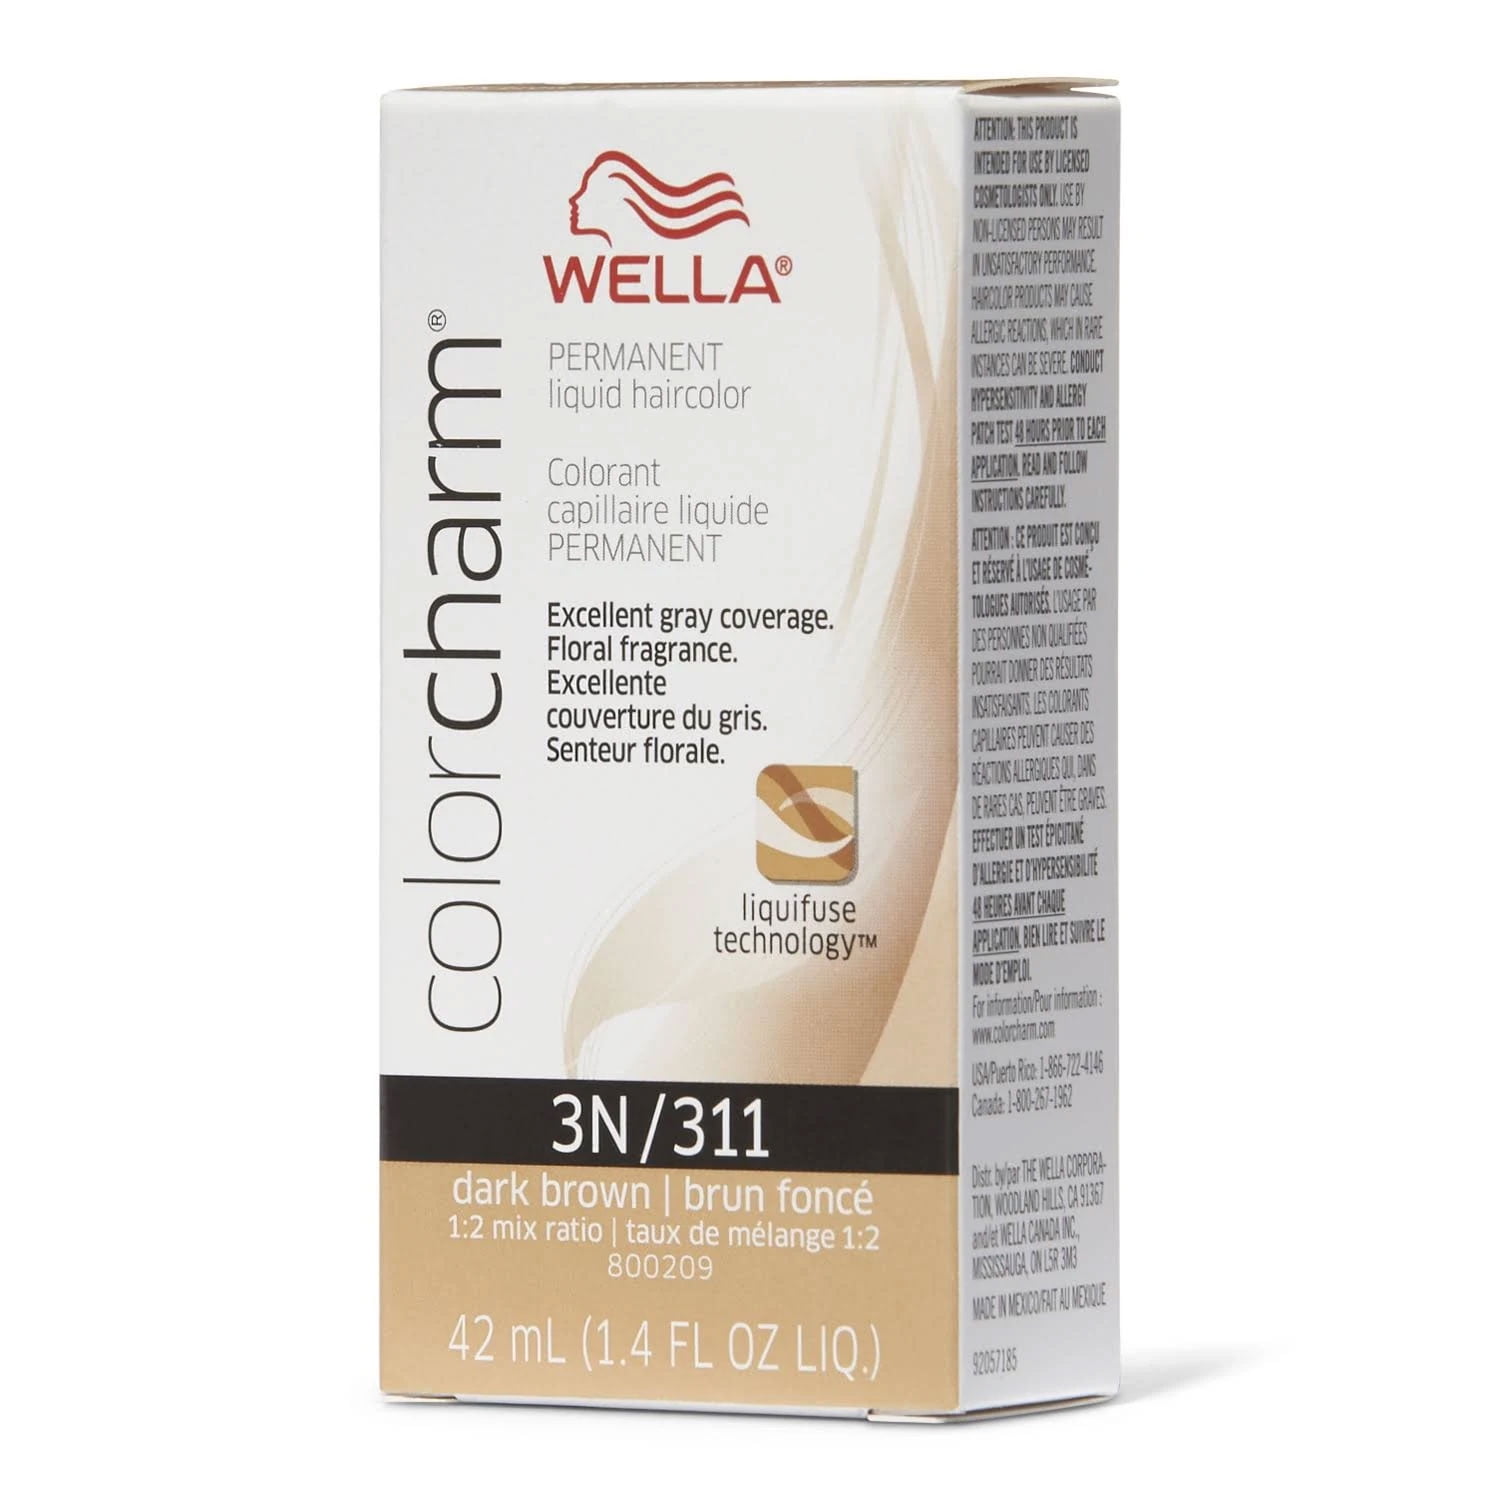 Wella COLOR CHARM, HAIR COLOR Permanent Liquid Haircolor, 3N/311 Dark  Brown, 1.4 Oz. 